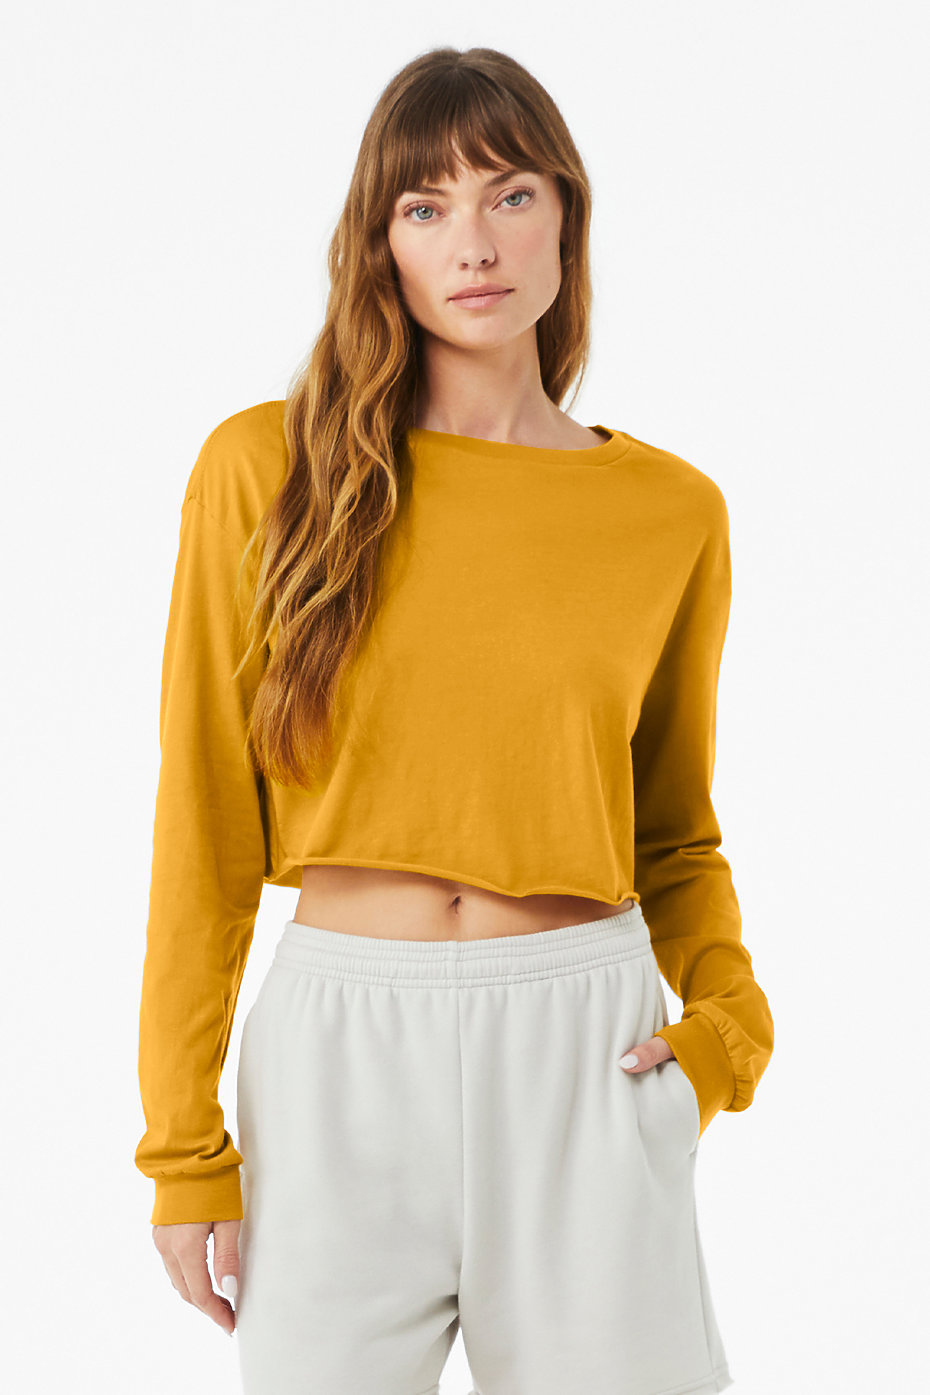 Long Sleeve Crop Top, Womens Wholesale Clothing, Blank Plain T Shirts